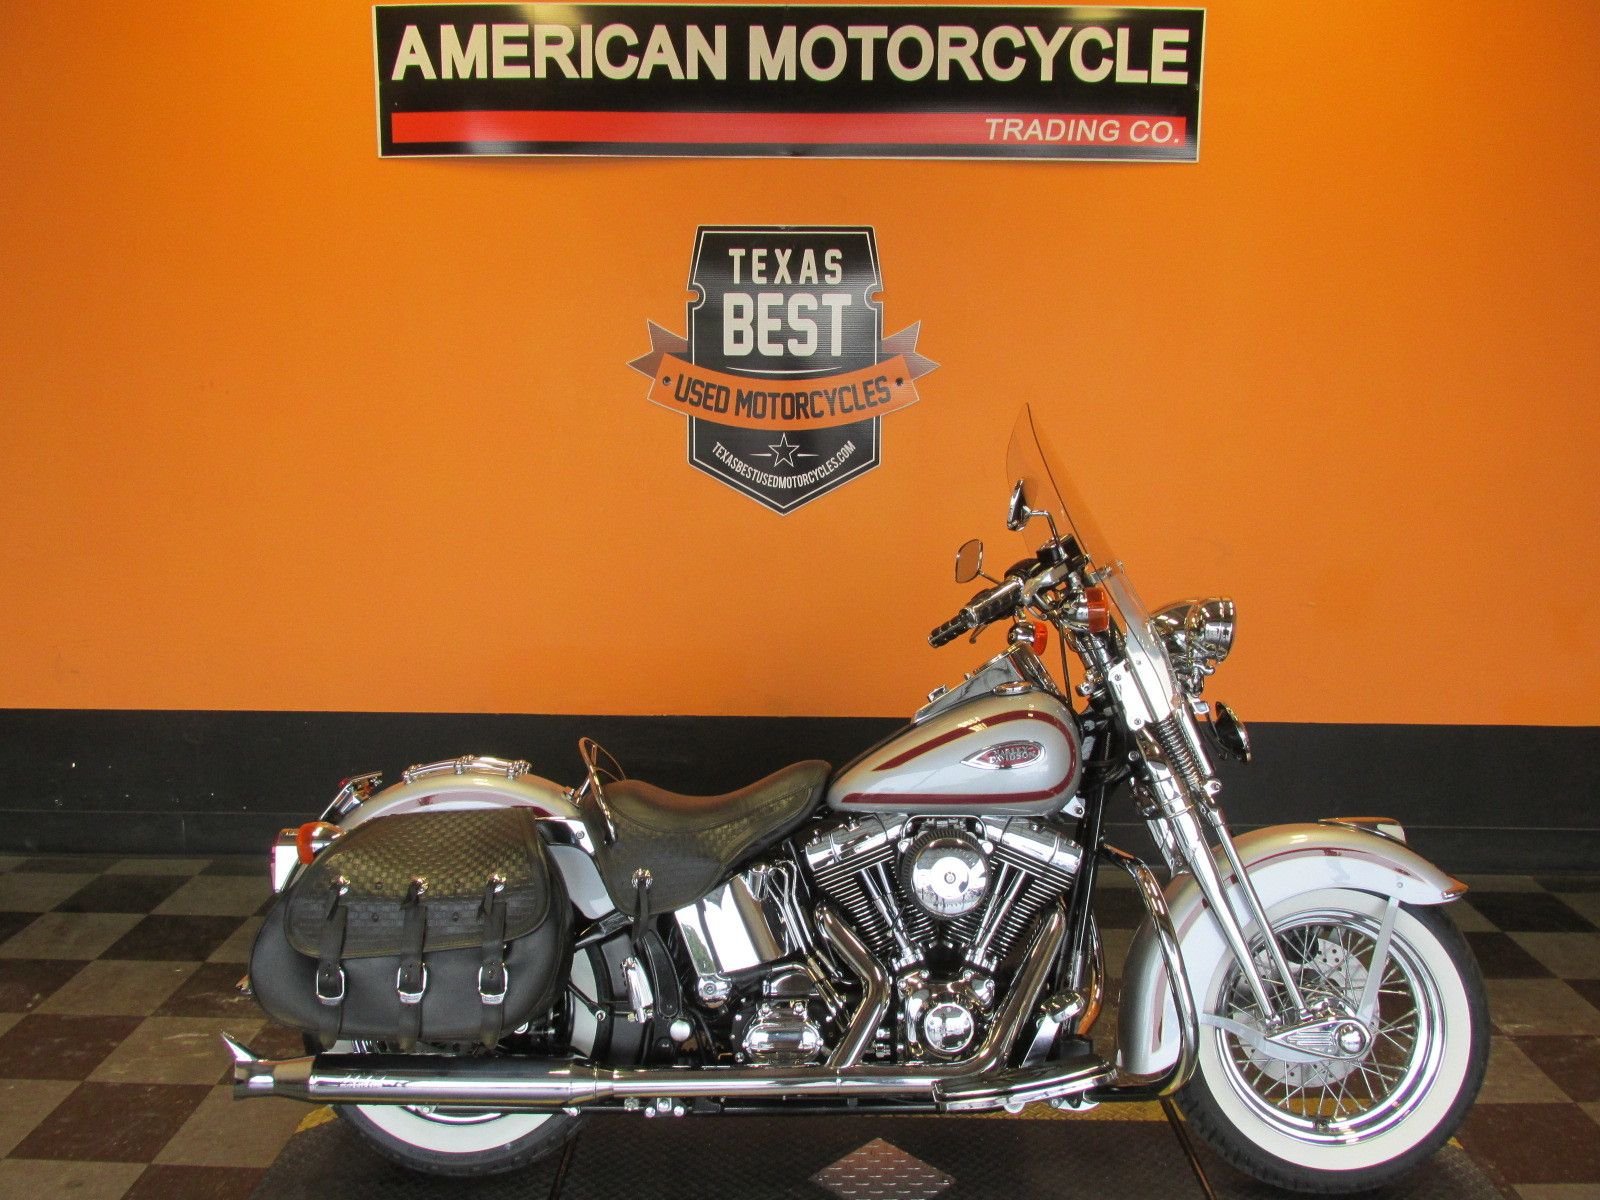 2000 Harley-Davidson Softail Heritage Springer | American Motorcycle  Trading Company - Used Harley Davidson Motorcycles